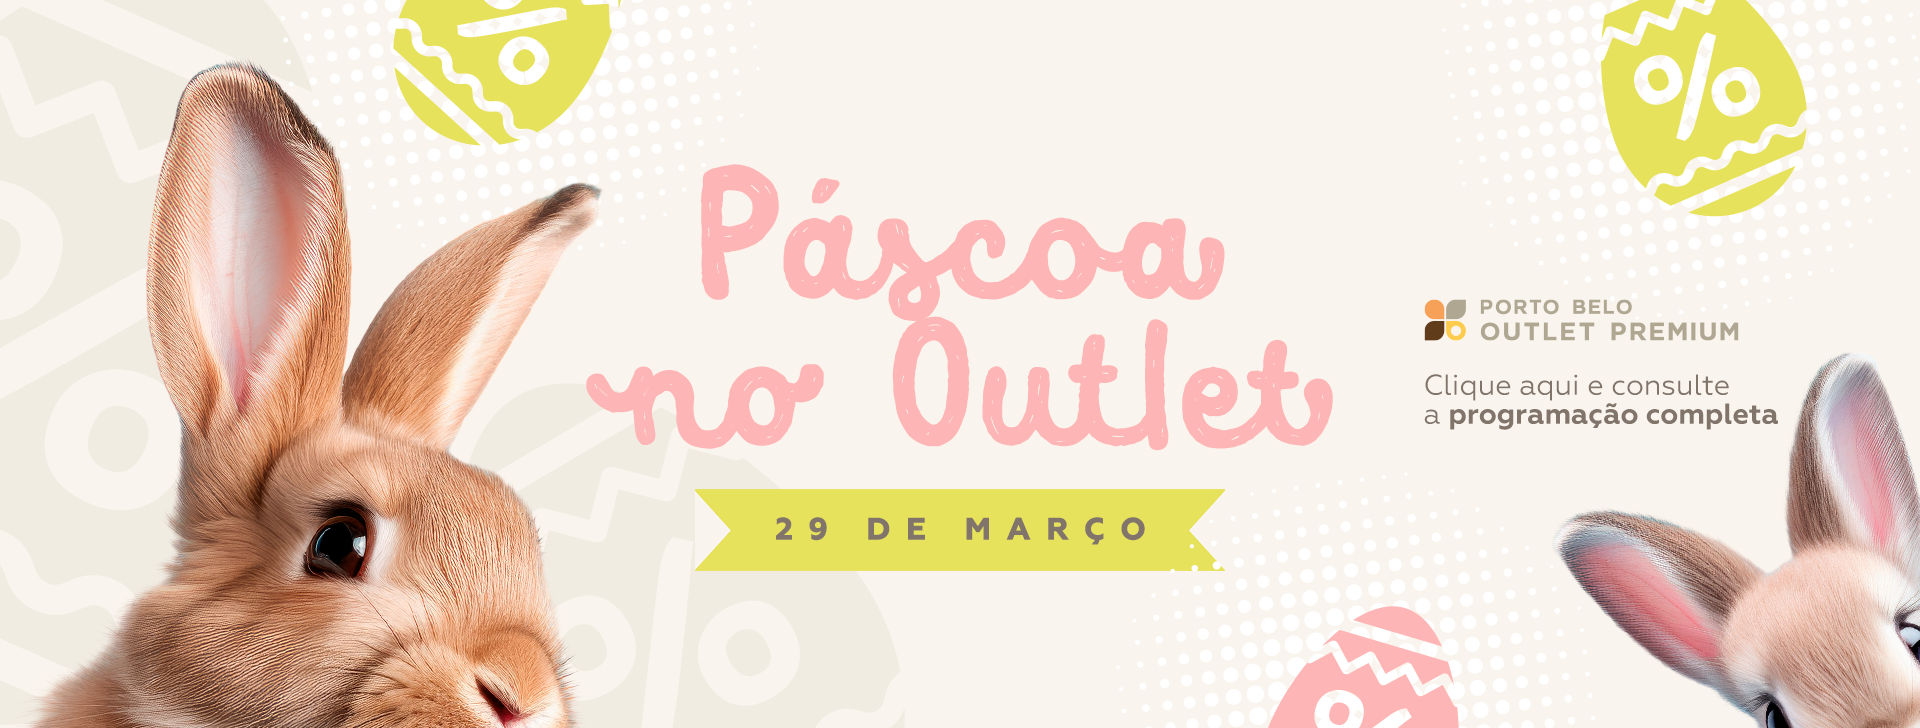 Imagem Páscoa Porto Belo Outlet Premium